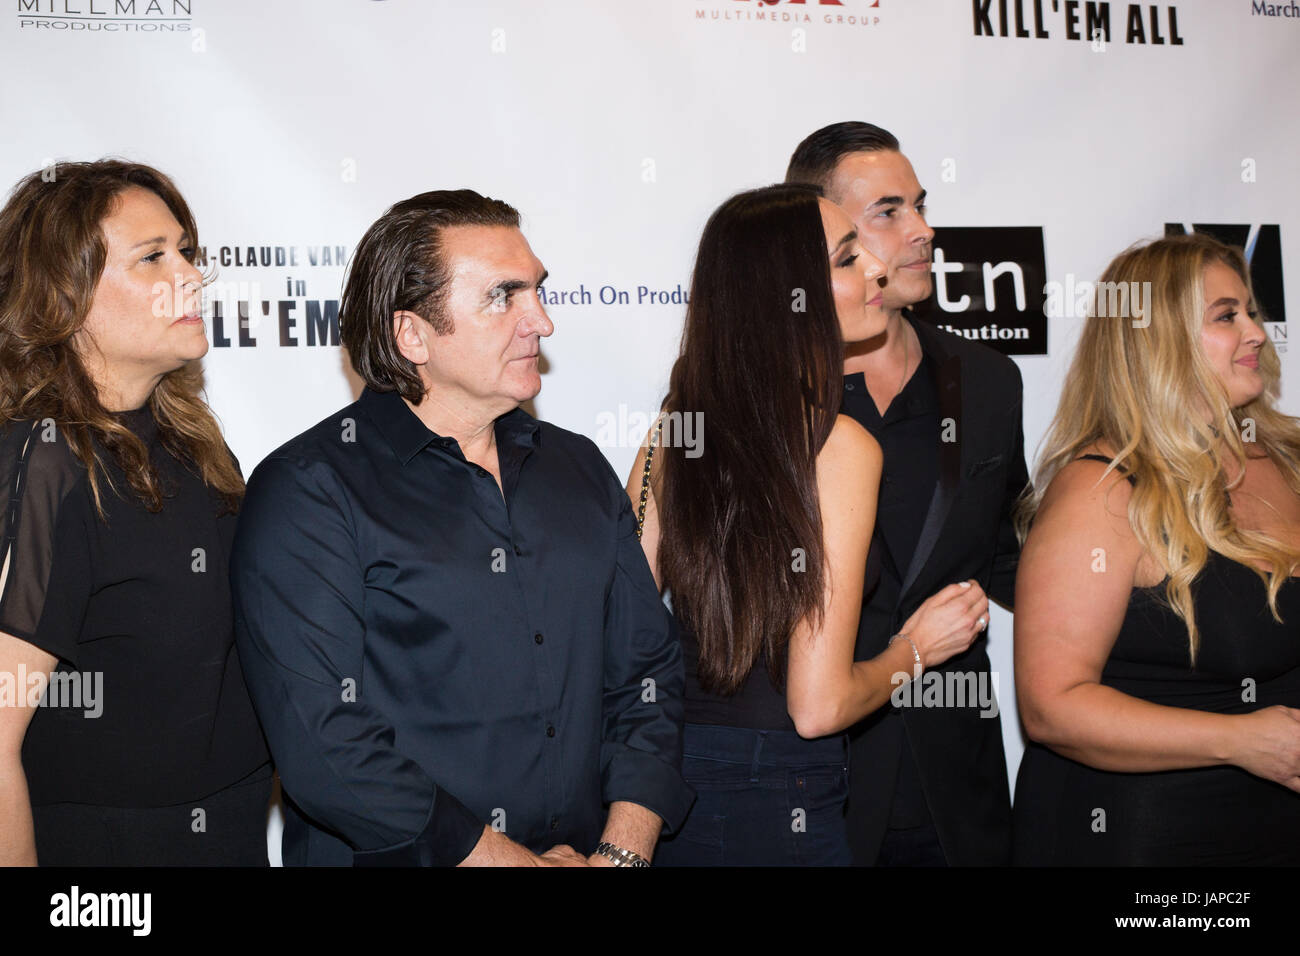 Peter Malota, Krystal Malota, Katrina Malota, Lisa Malota, and Martin Malota attend the premiere of Destination Films' 'Kill 'em All' at Harmony Gold on June 6, 2017 in Los Angeles, California. Stock Photo